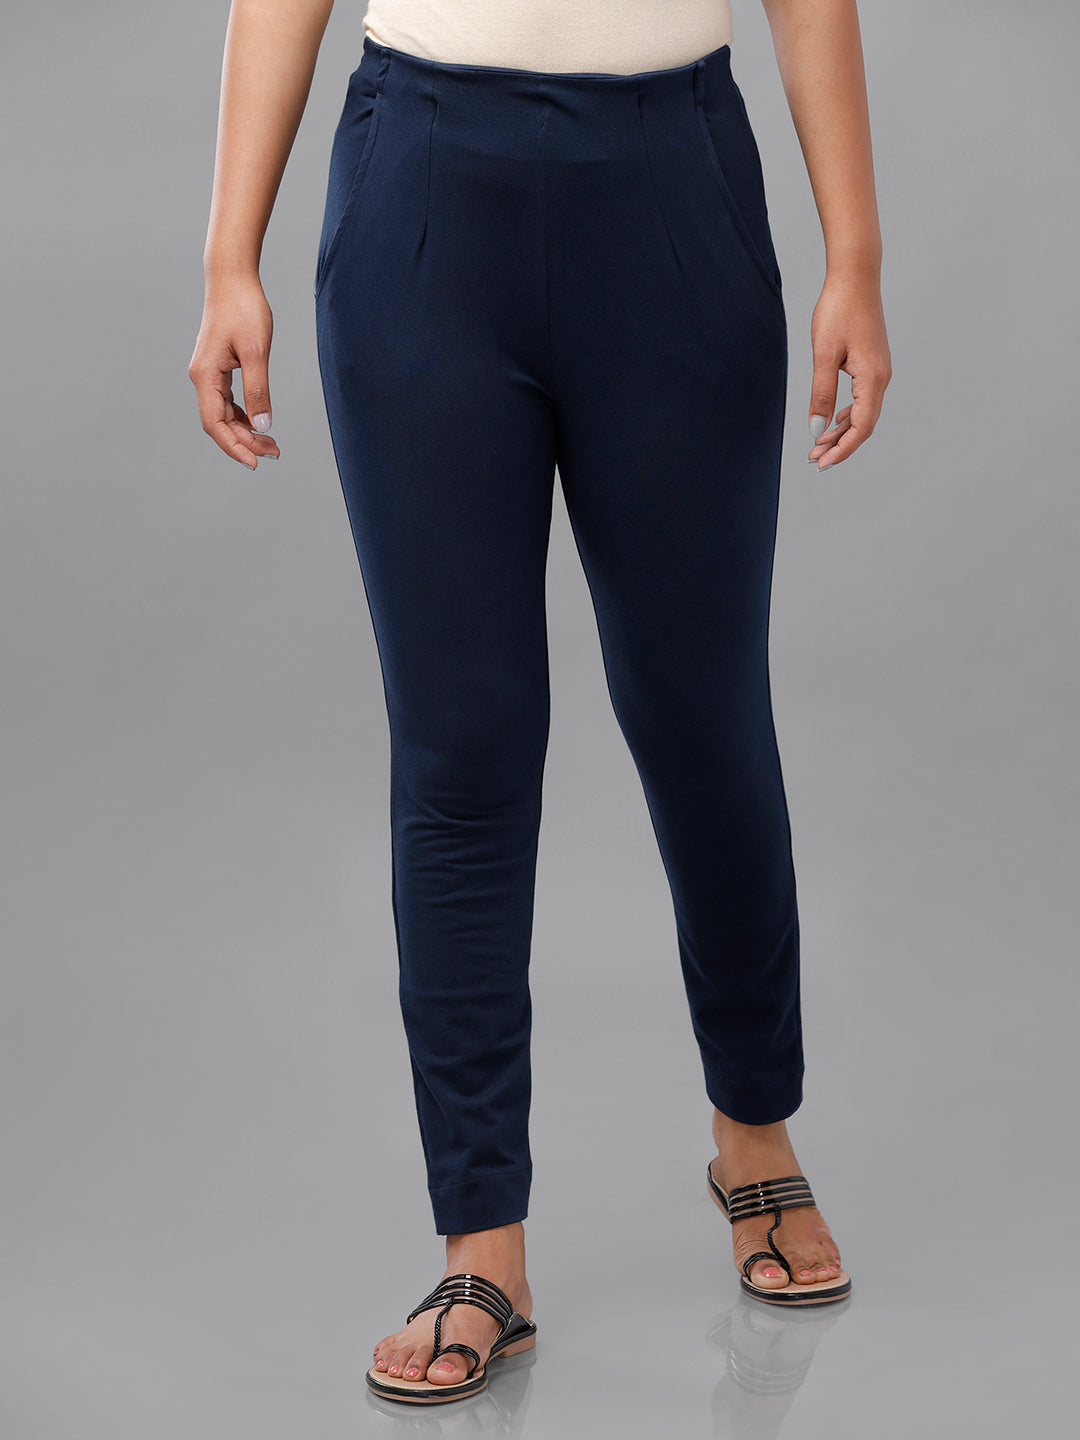 Women's pants solid color simple slim-fit leggings casual wrap hip pencil  pants female tight trousers large size - AliExpress